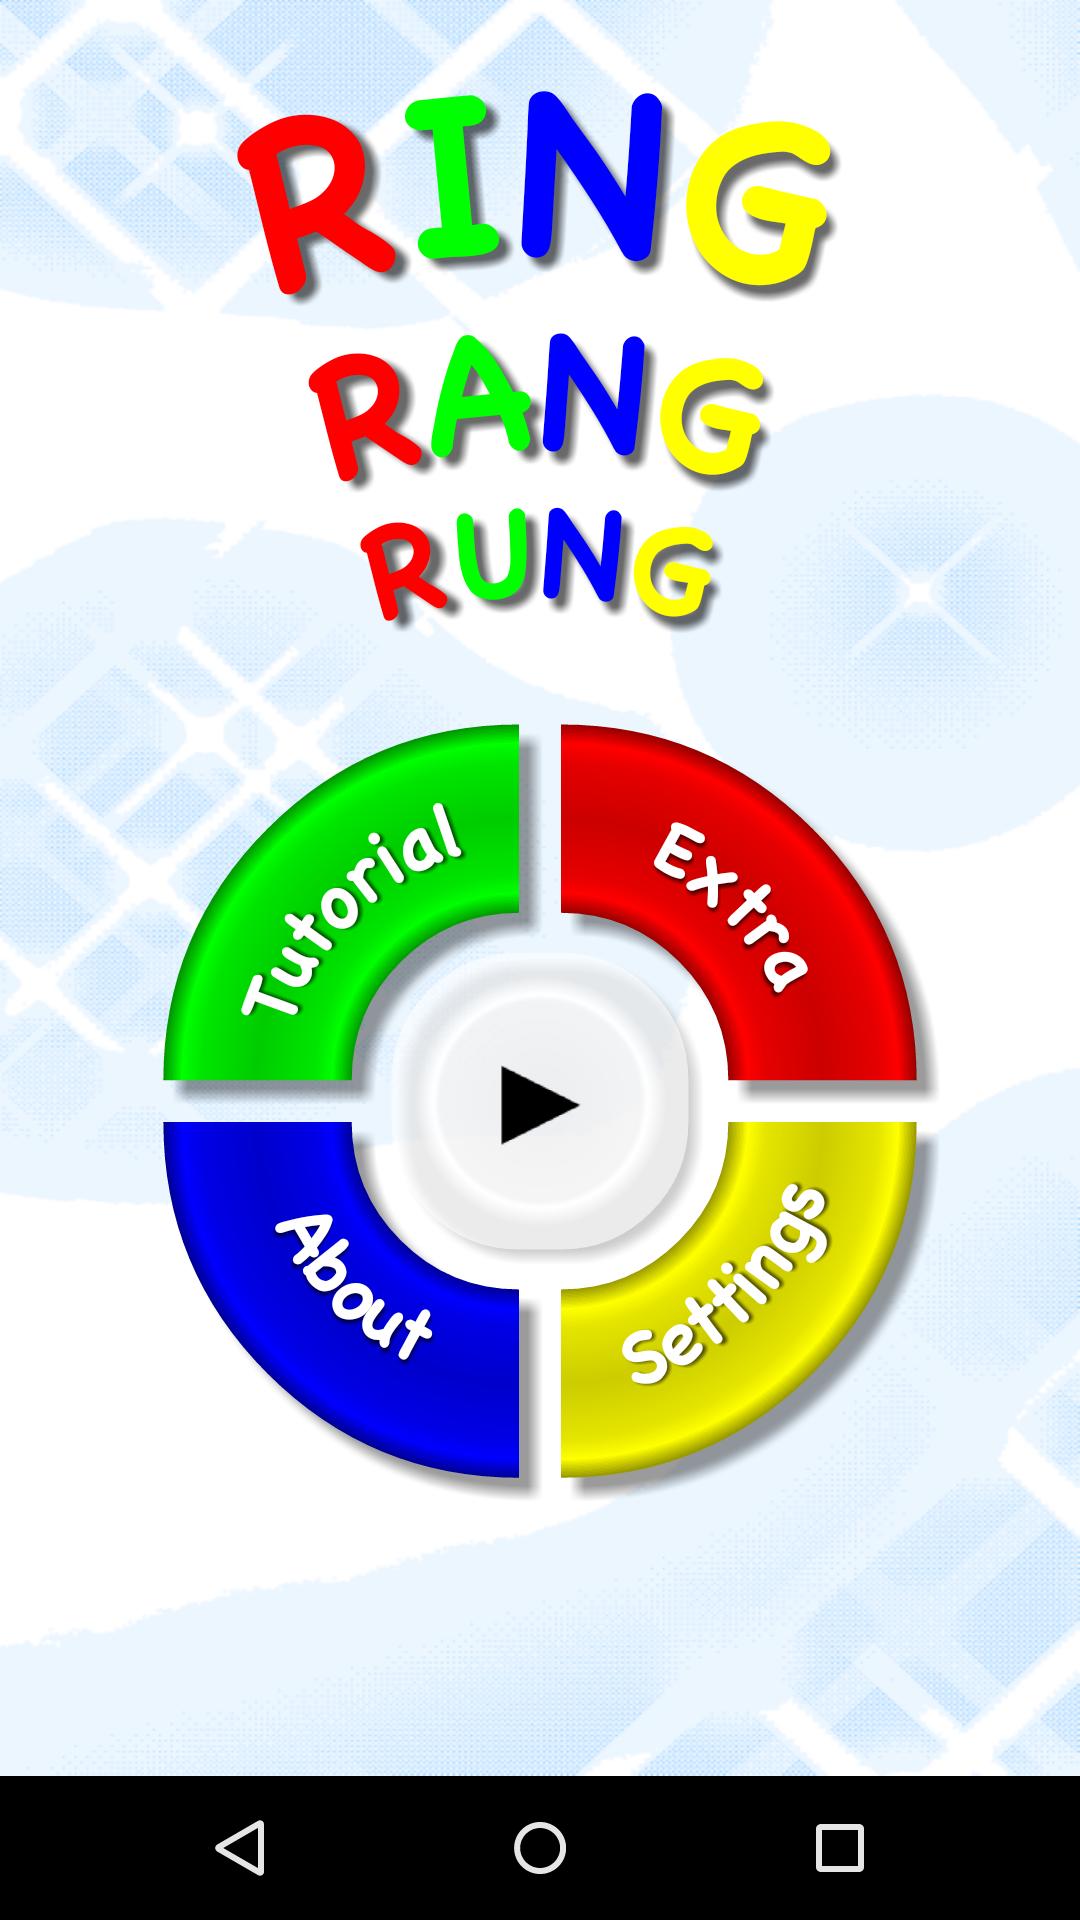 Ring rang rung неправильный глагол